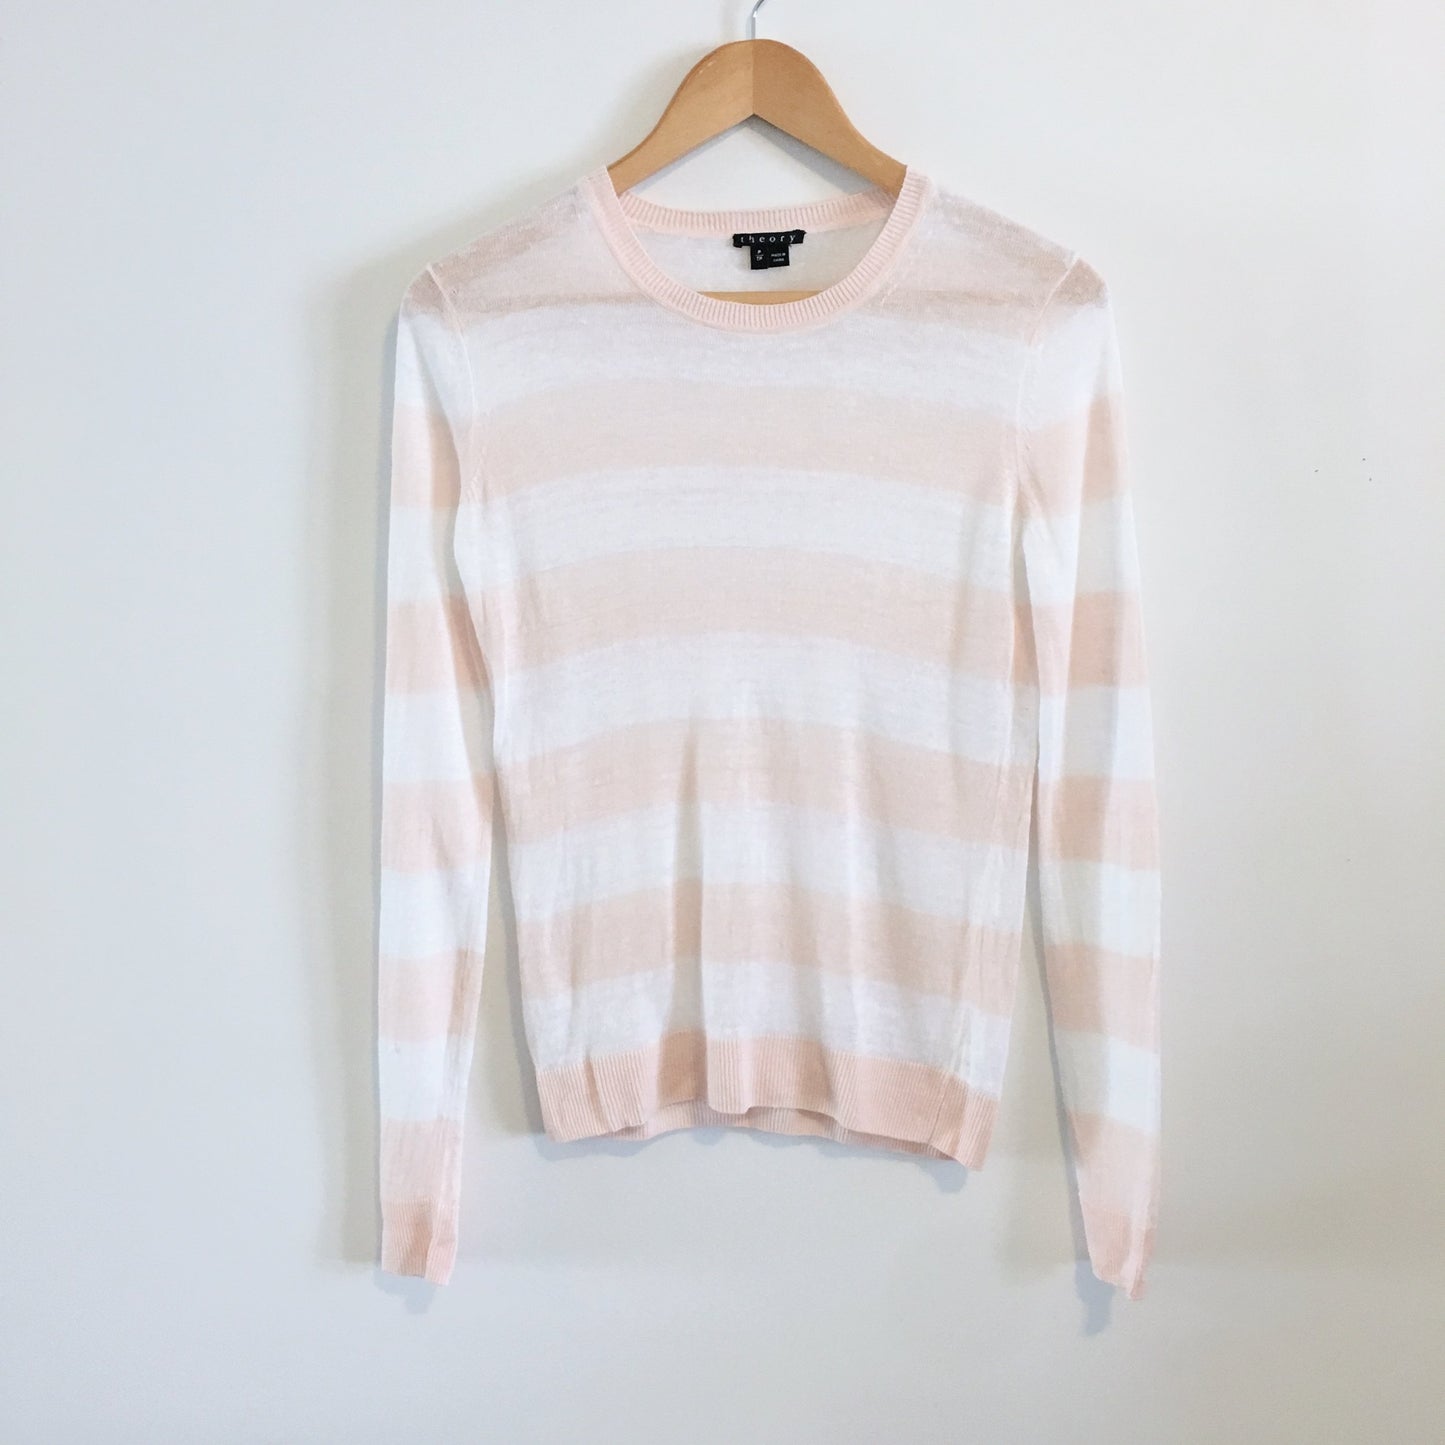 Theory Light Knit Striped Linen Sweater - size Small